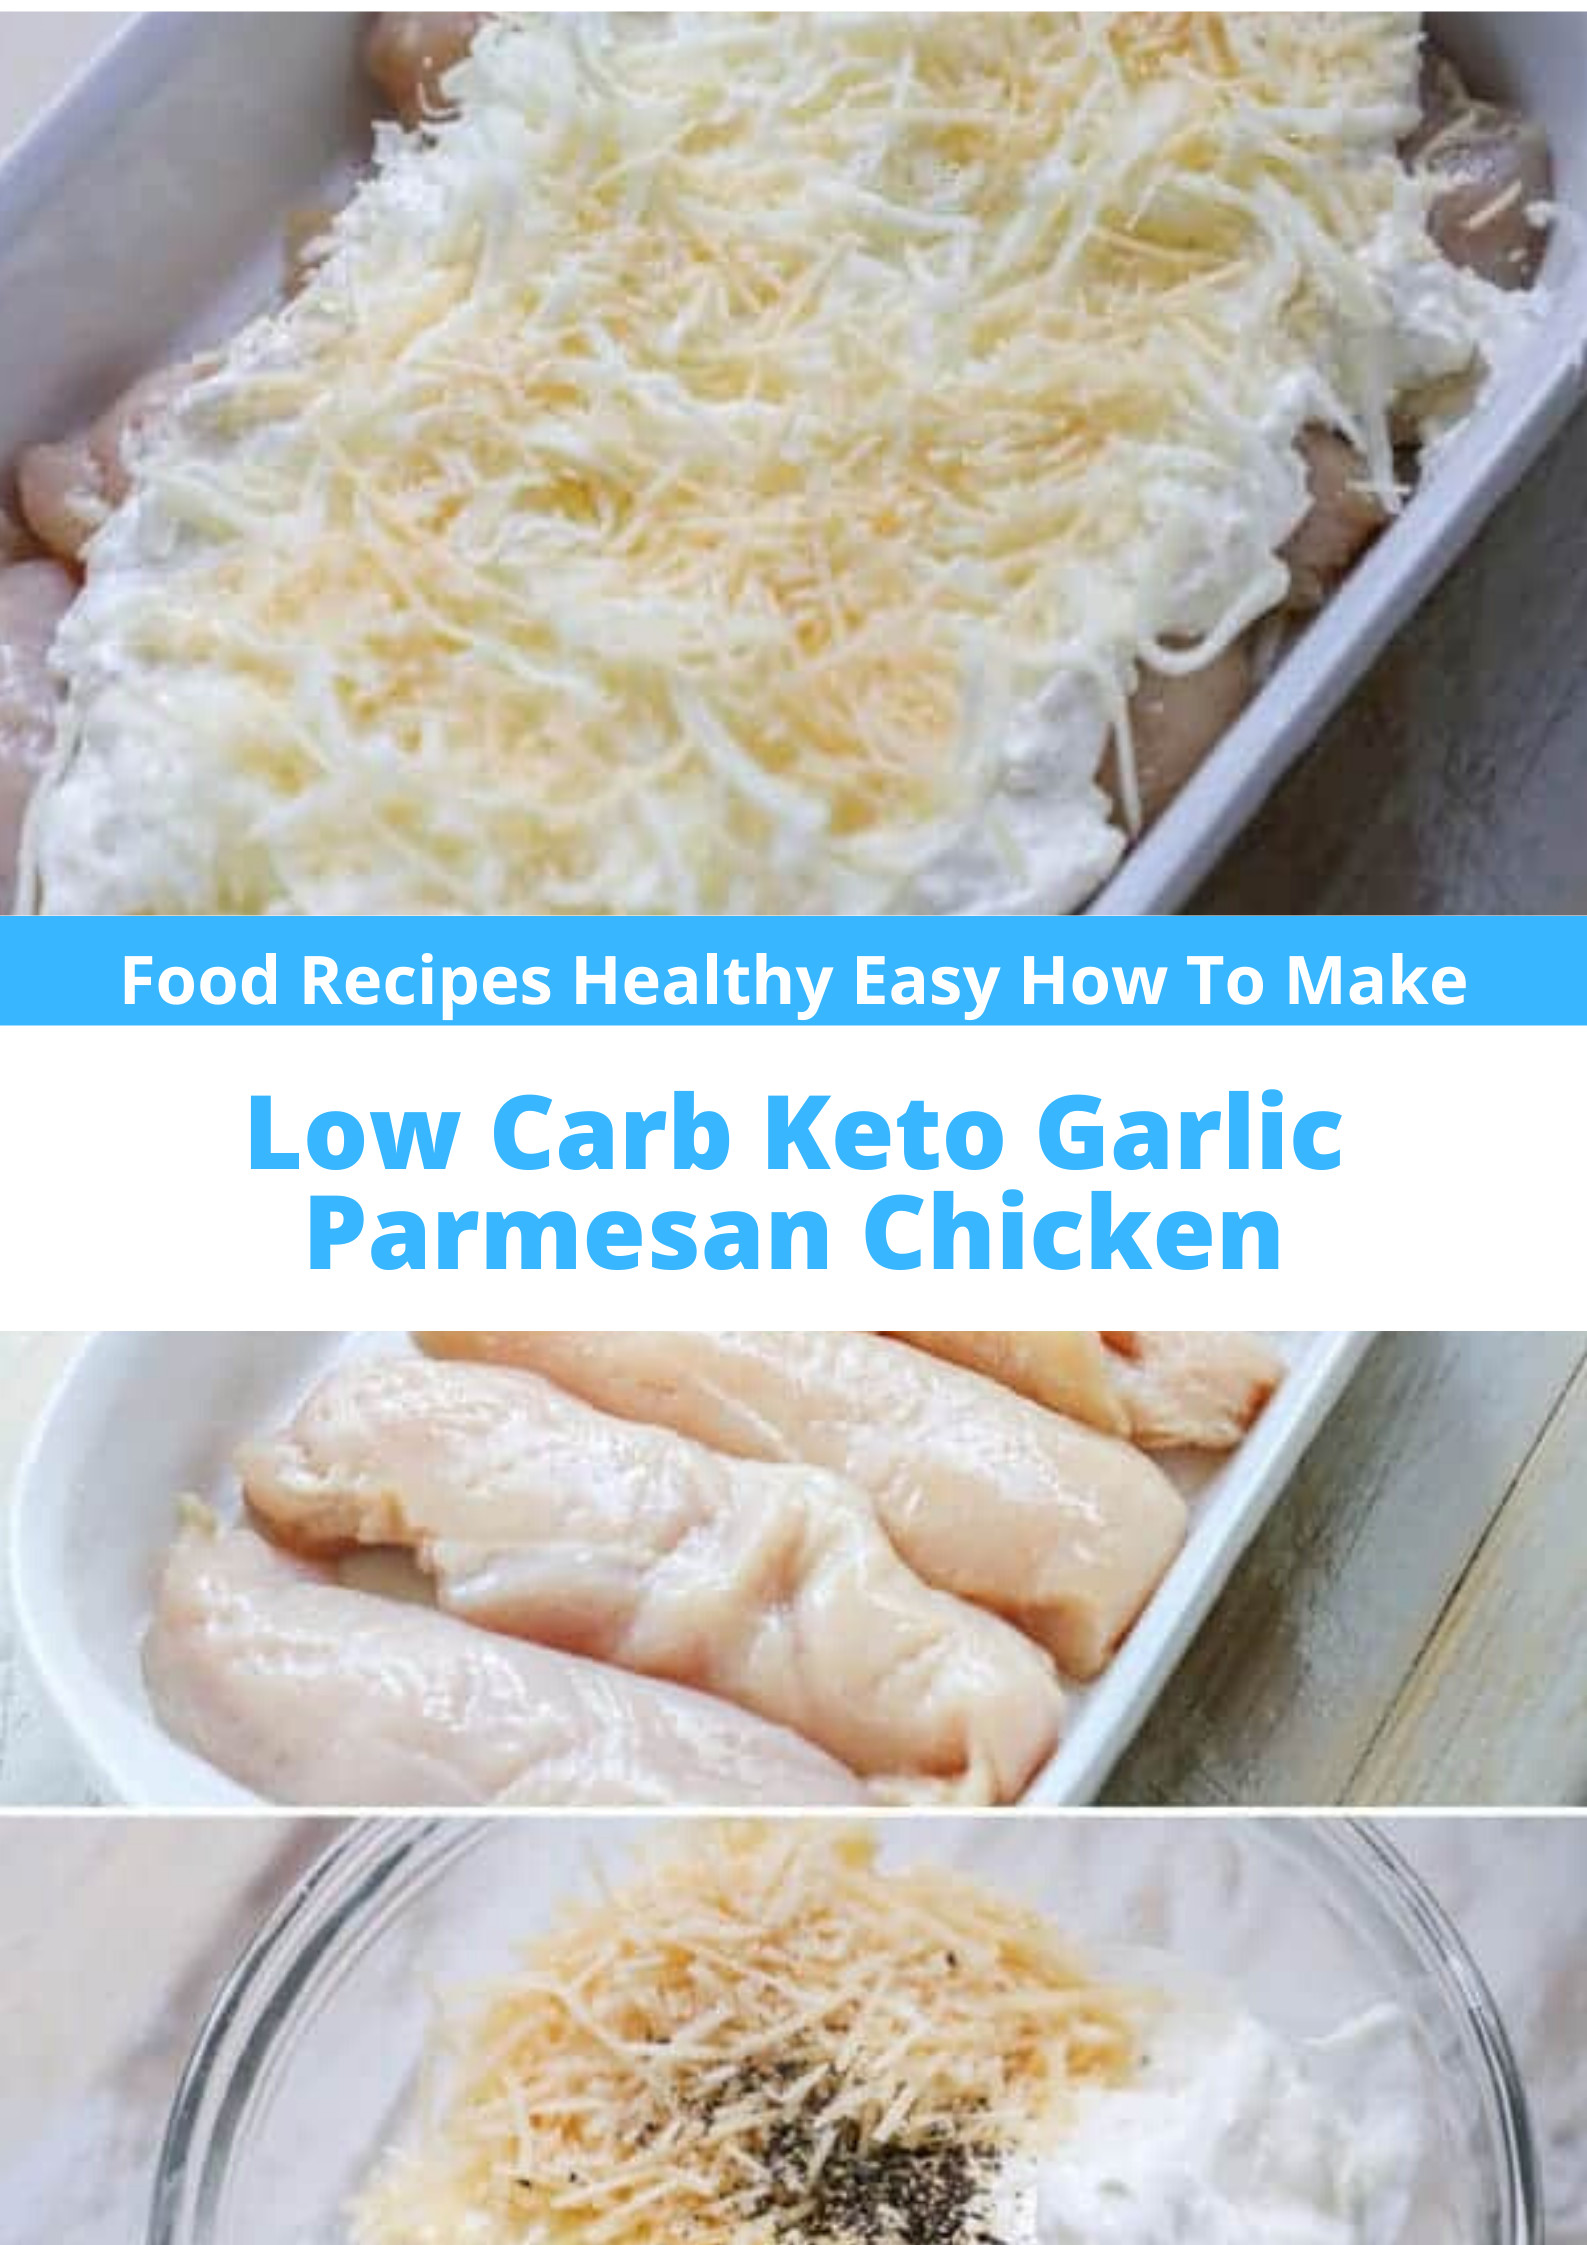 Low Carb Keto Garlic Parmesan Chicken
 Low Carb Keto Garlic Parmesan Chicken in 2020